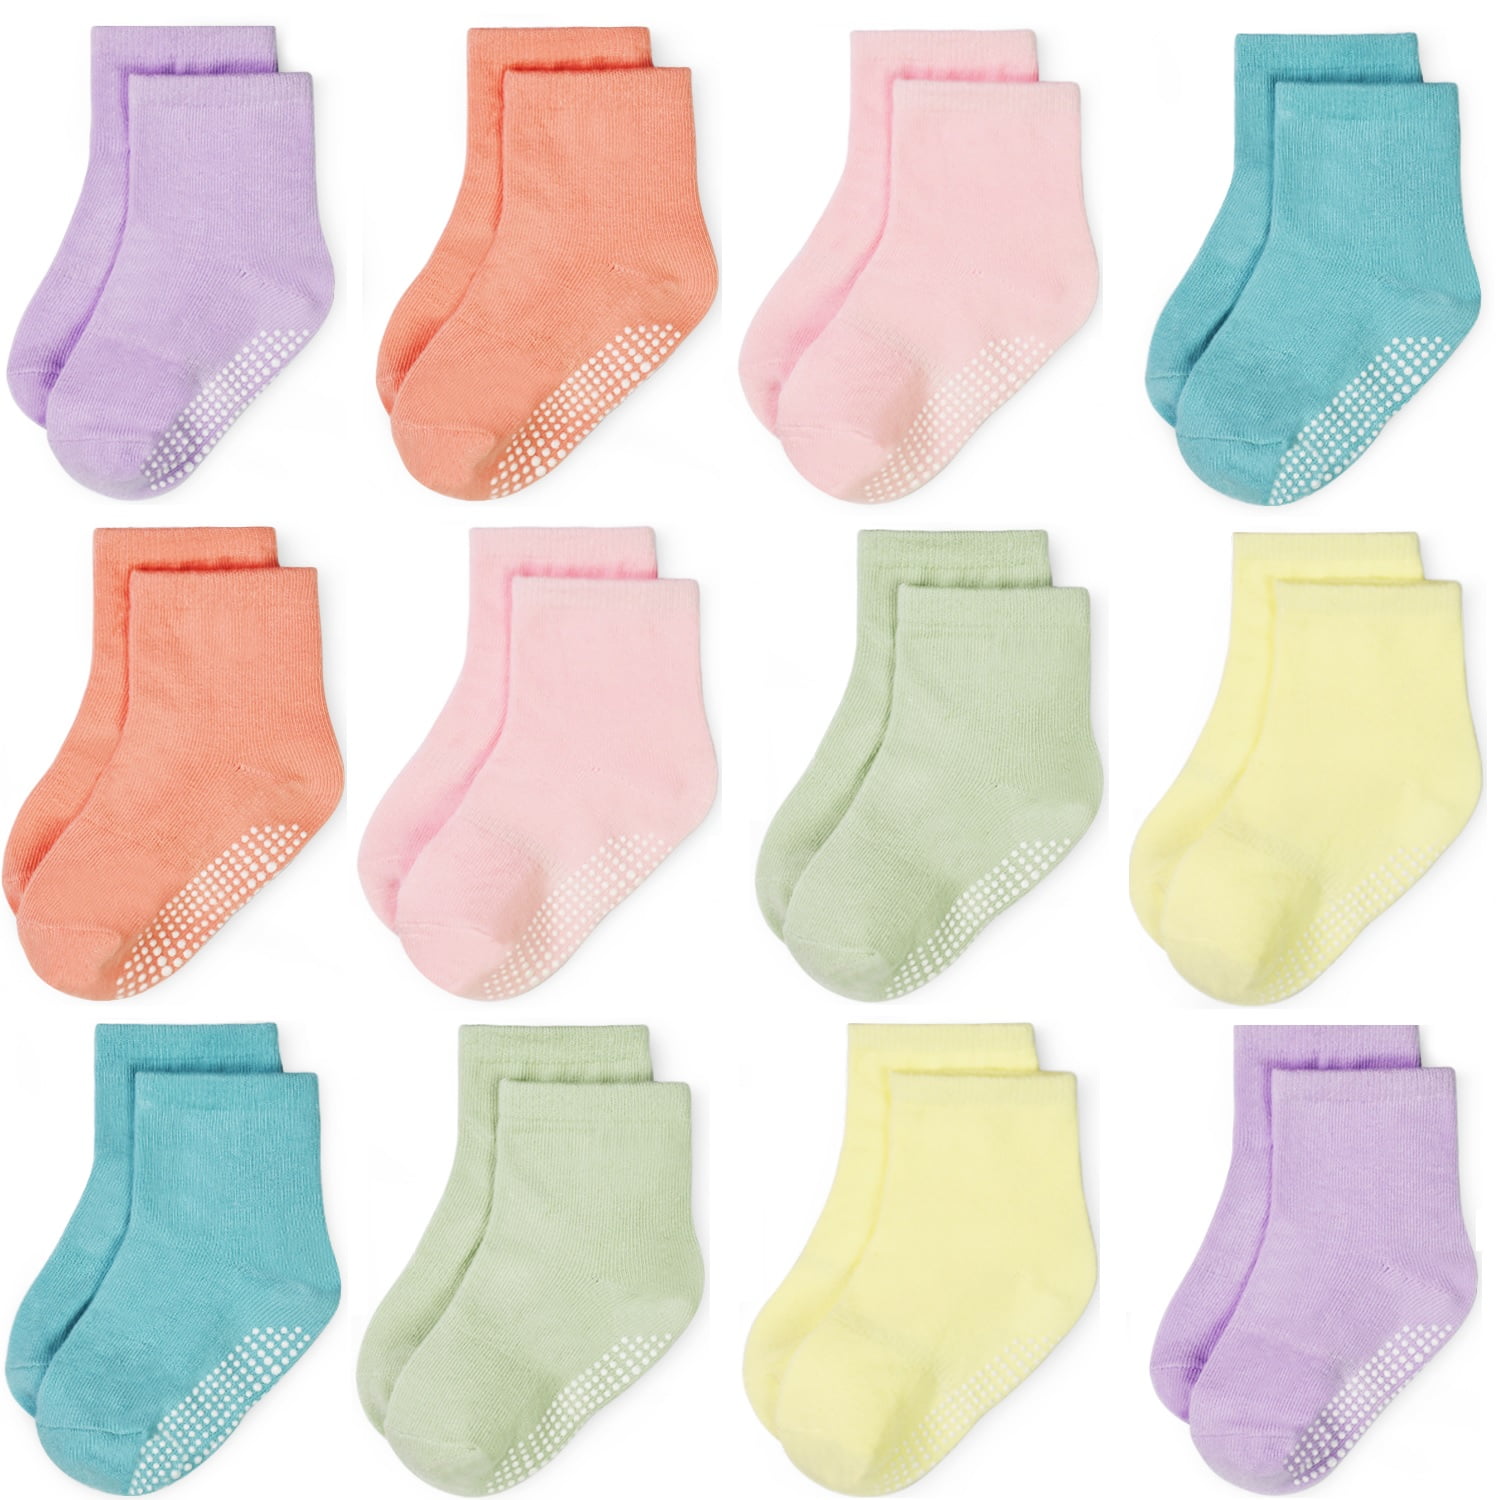 Toddler Boys Girls Non Slip Socks 12 Pairs Anti Skid Sticky Baby Socks ...